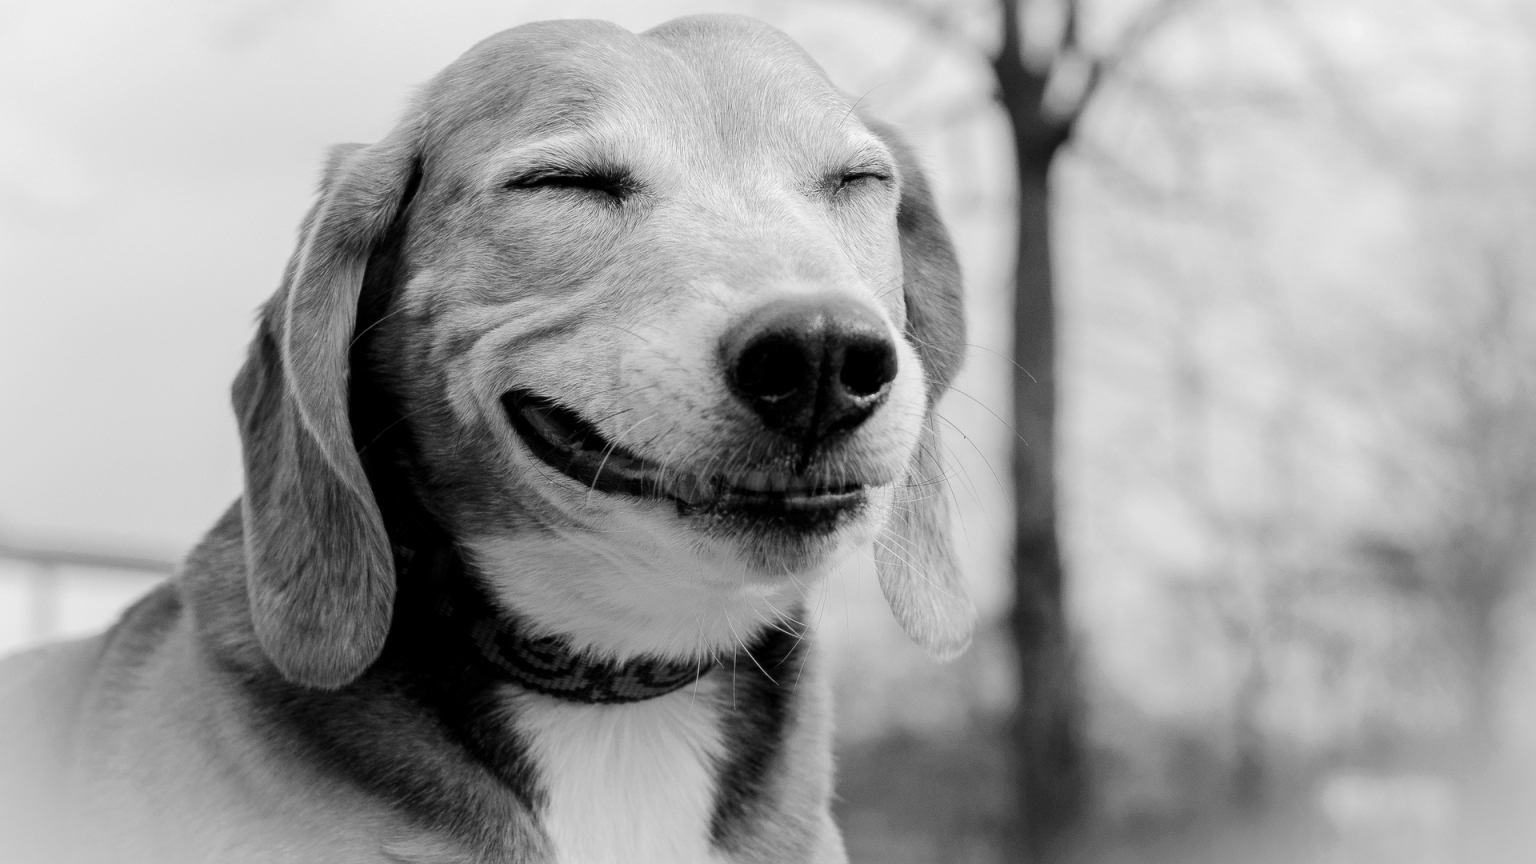 Smiling Dog for 1536 x 864 HDTV resolution